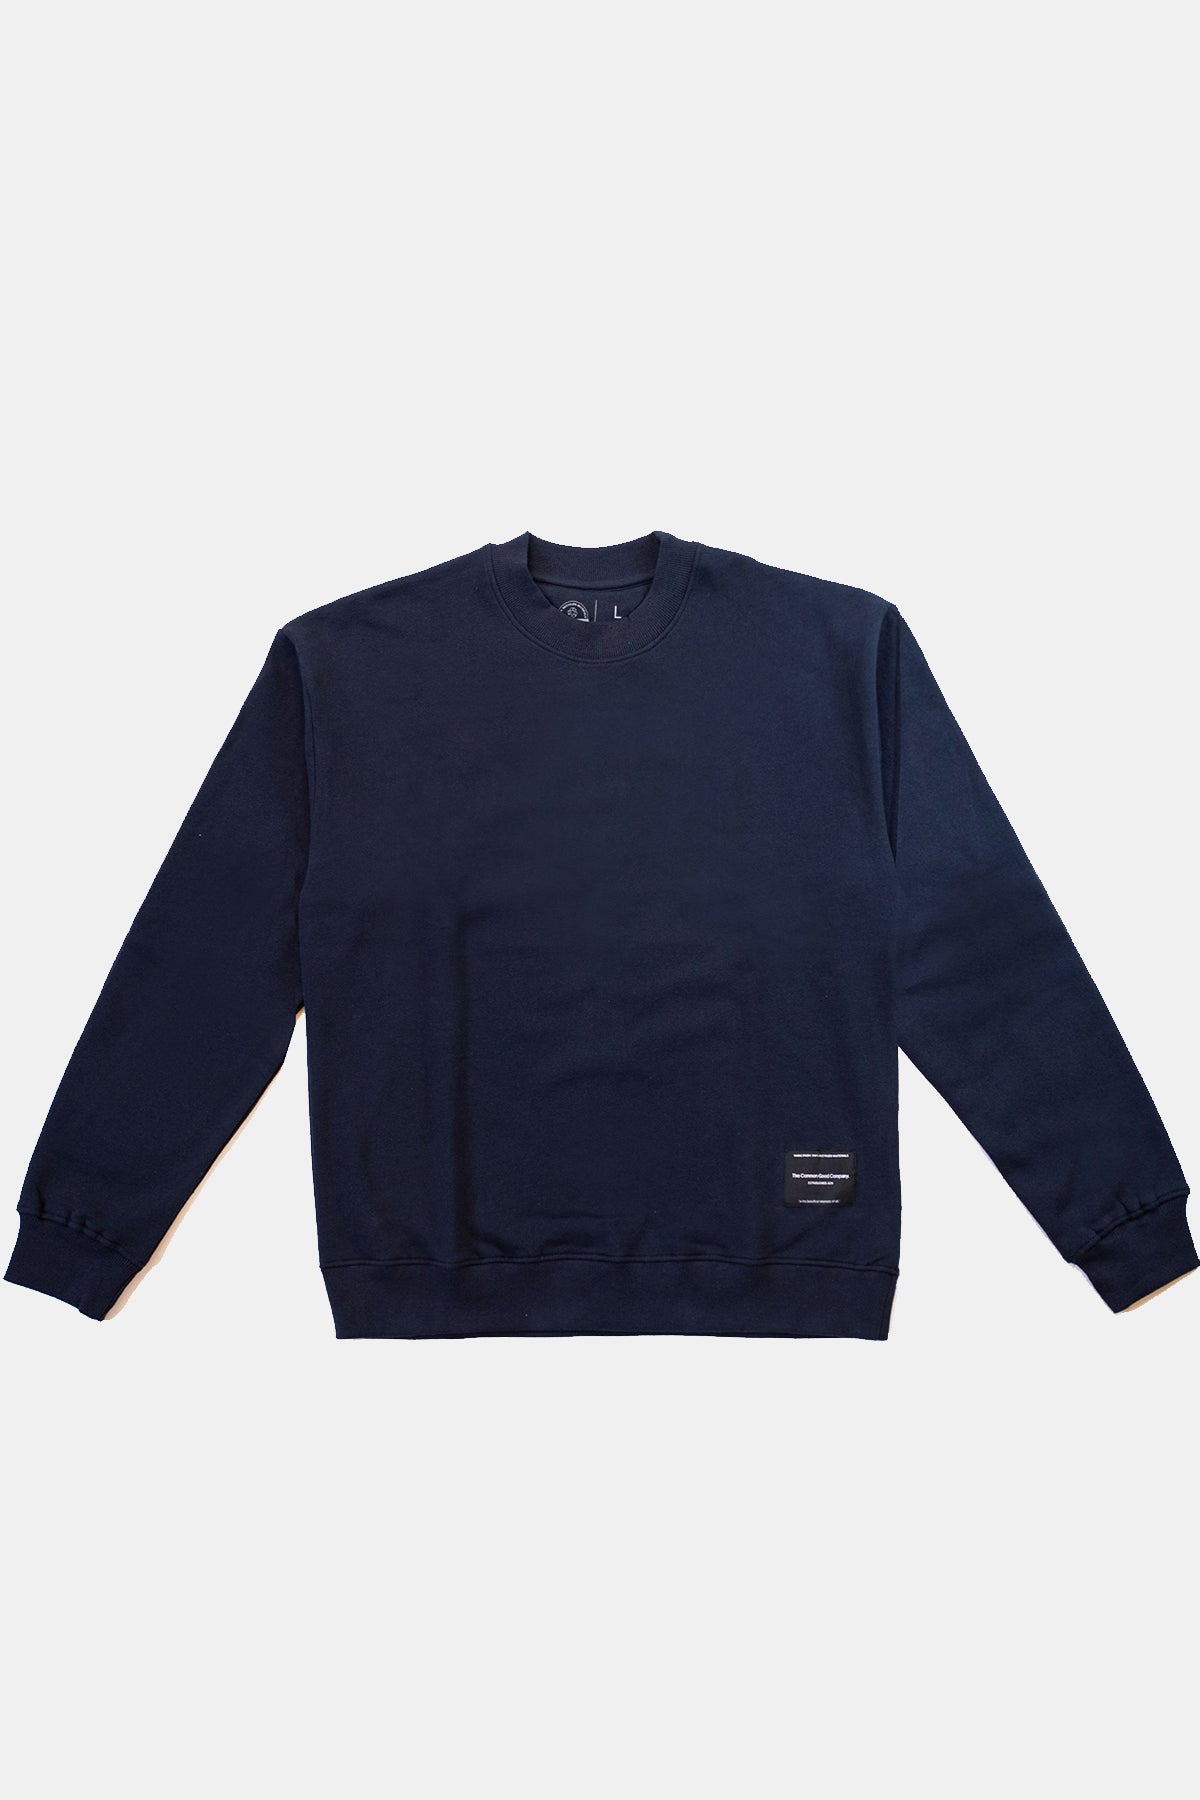  Plain Dane Navy Box Fit Sweater - Patch Adams